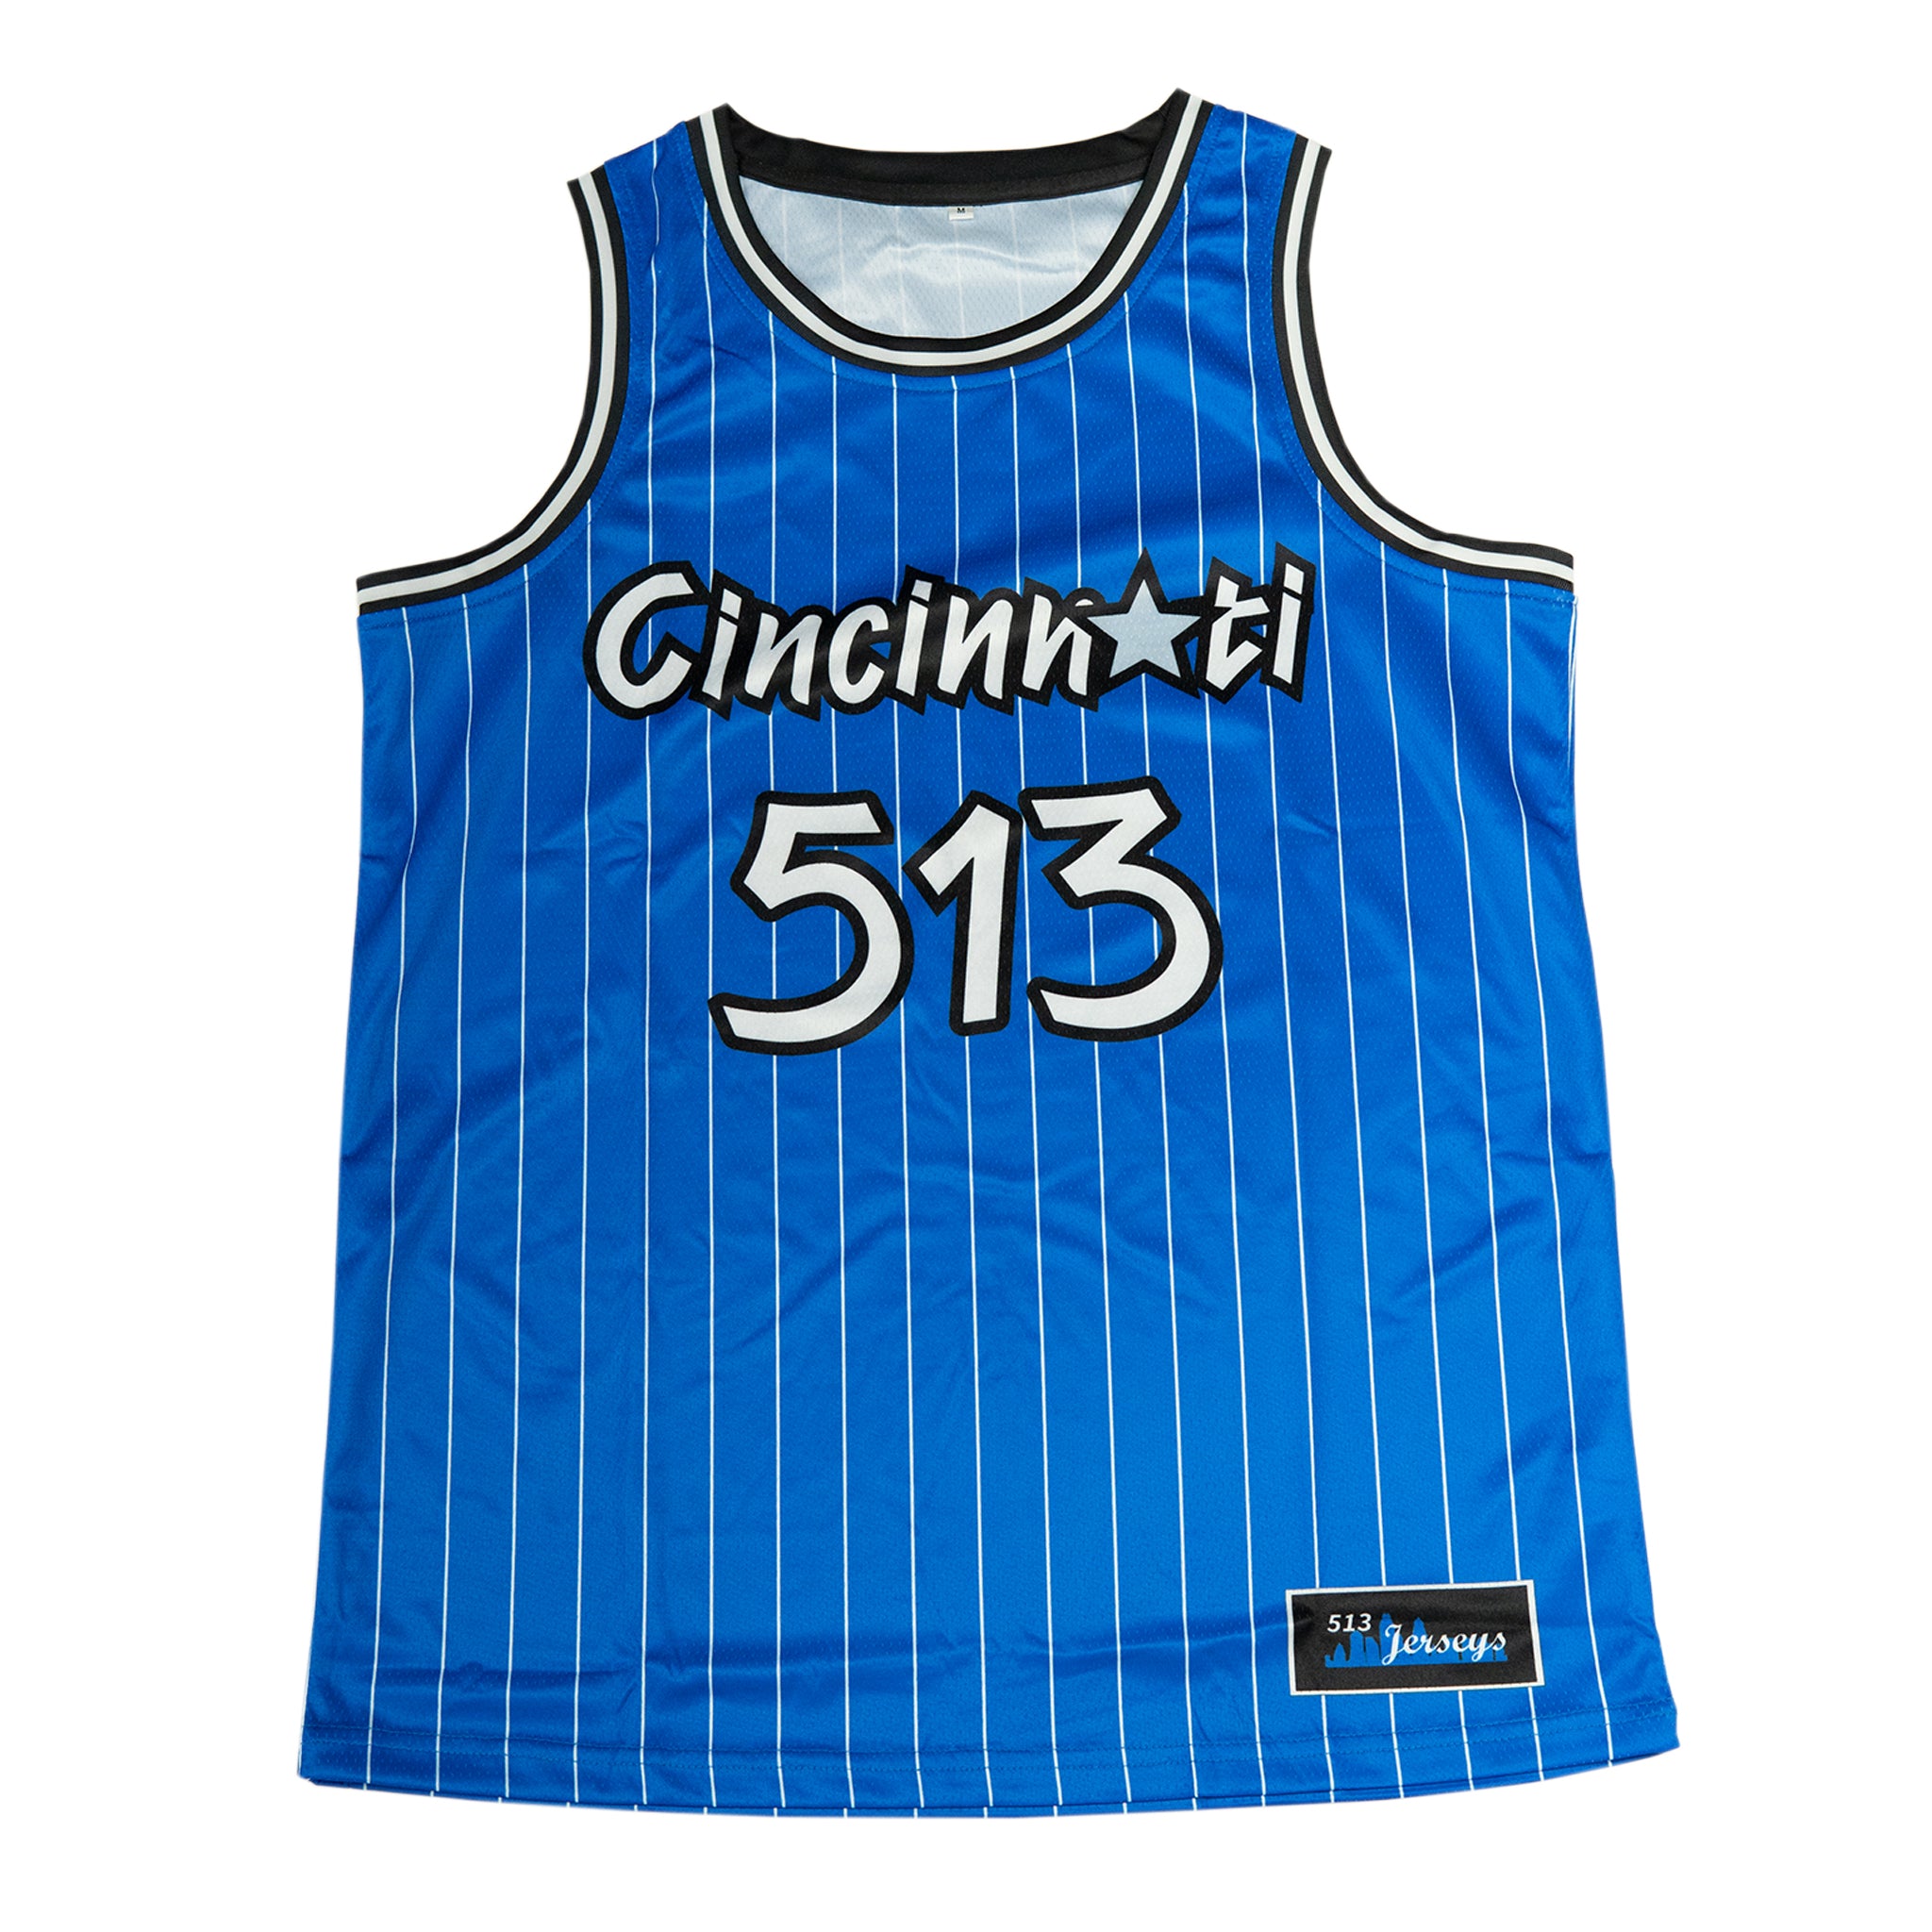 Cincinnati Magic Basketball Jersey